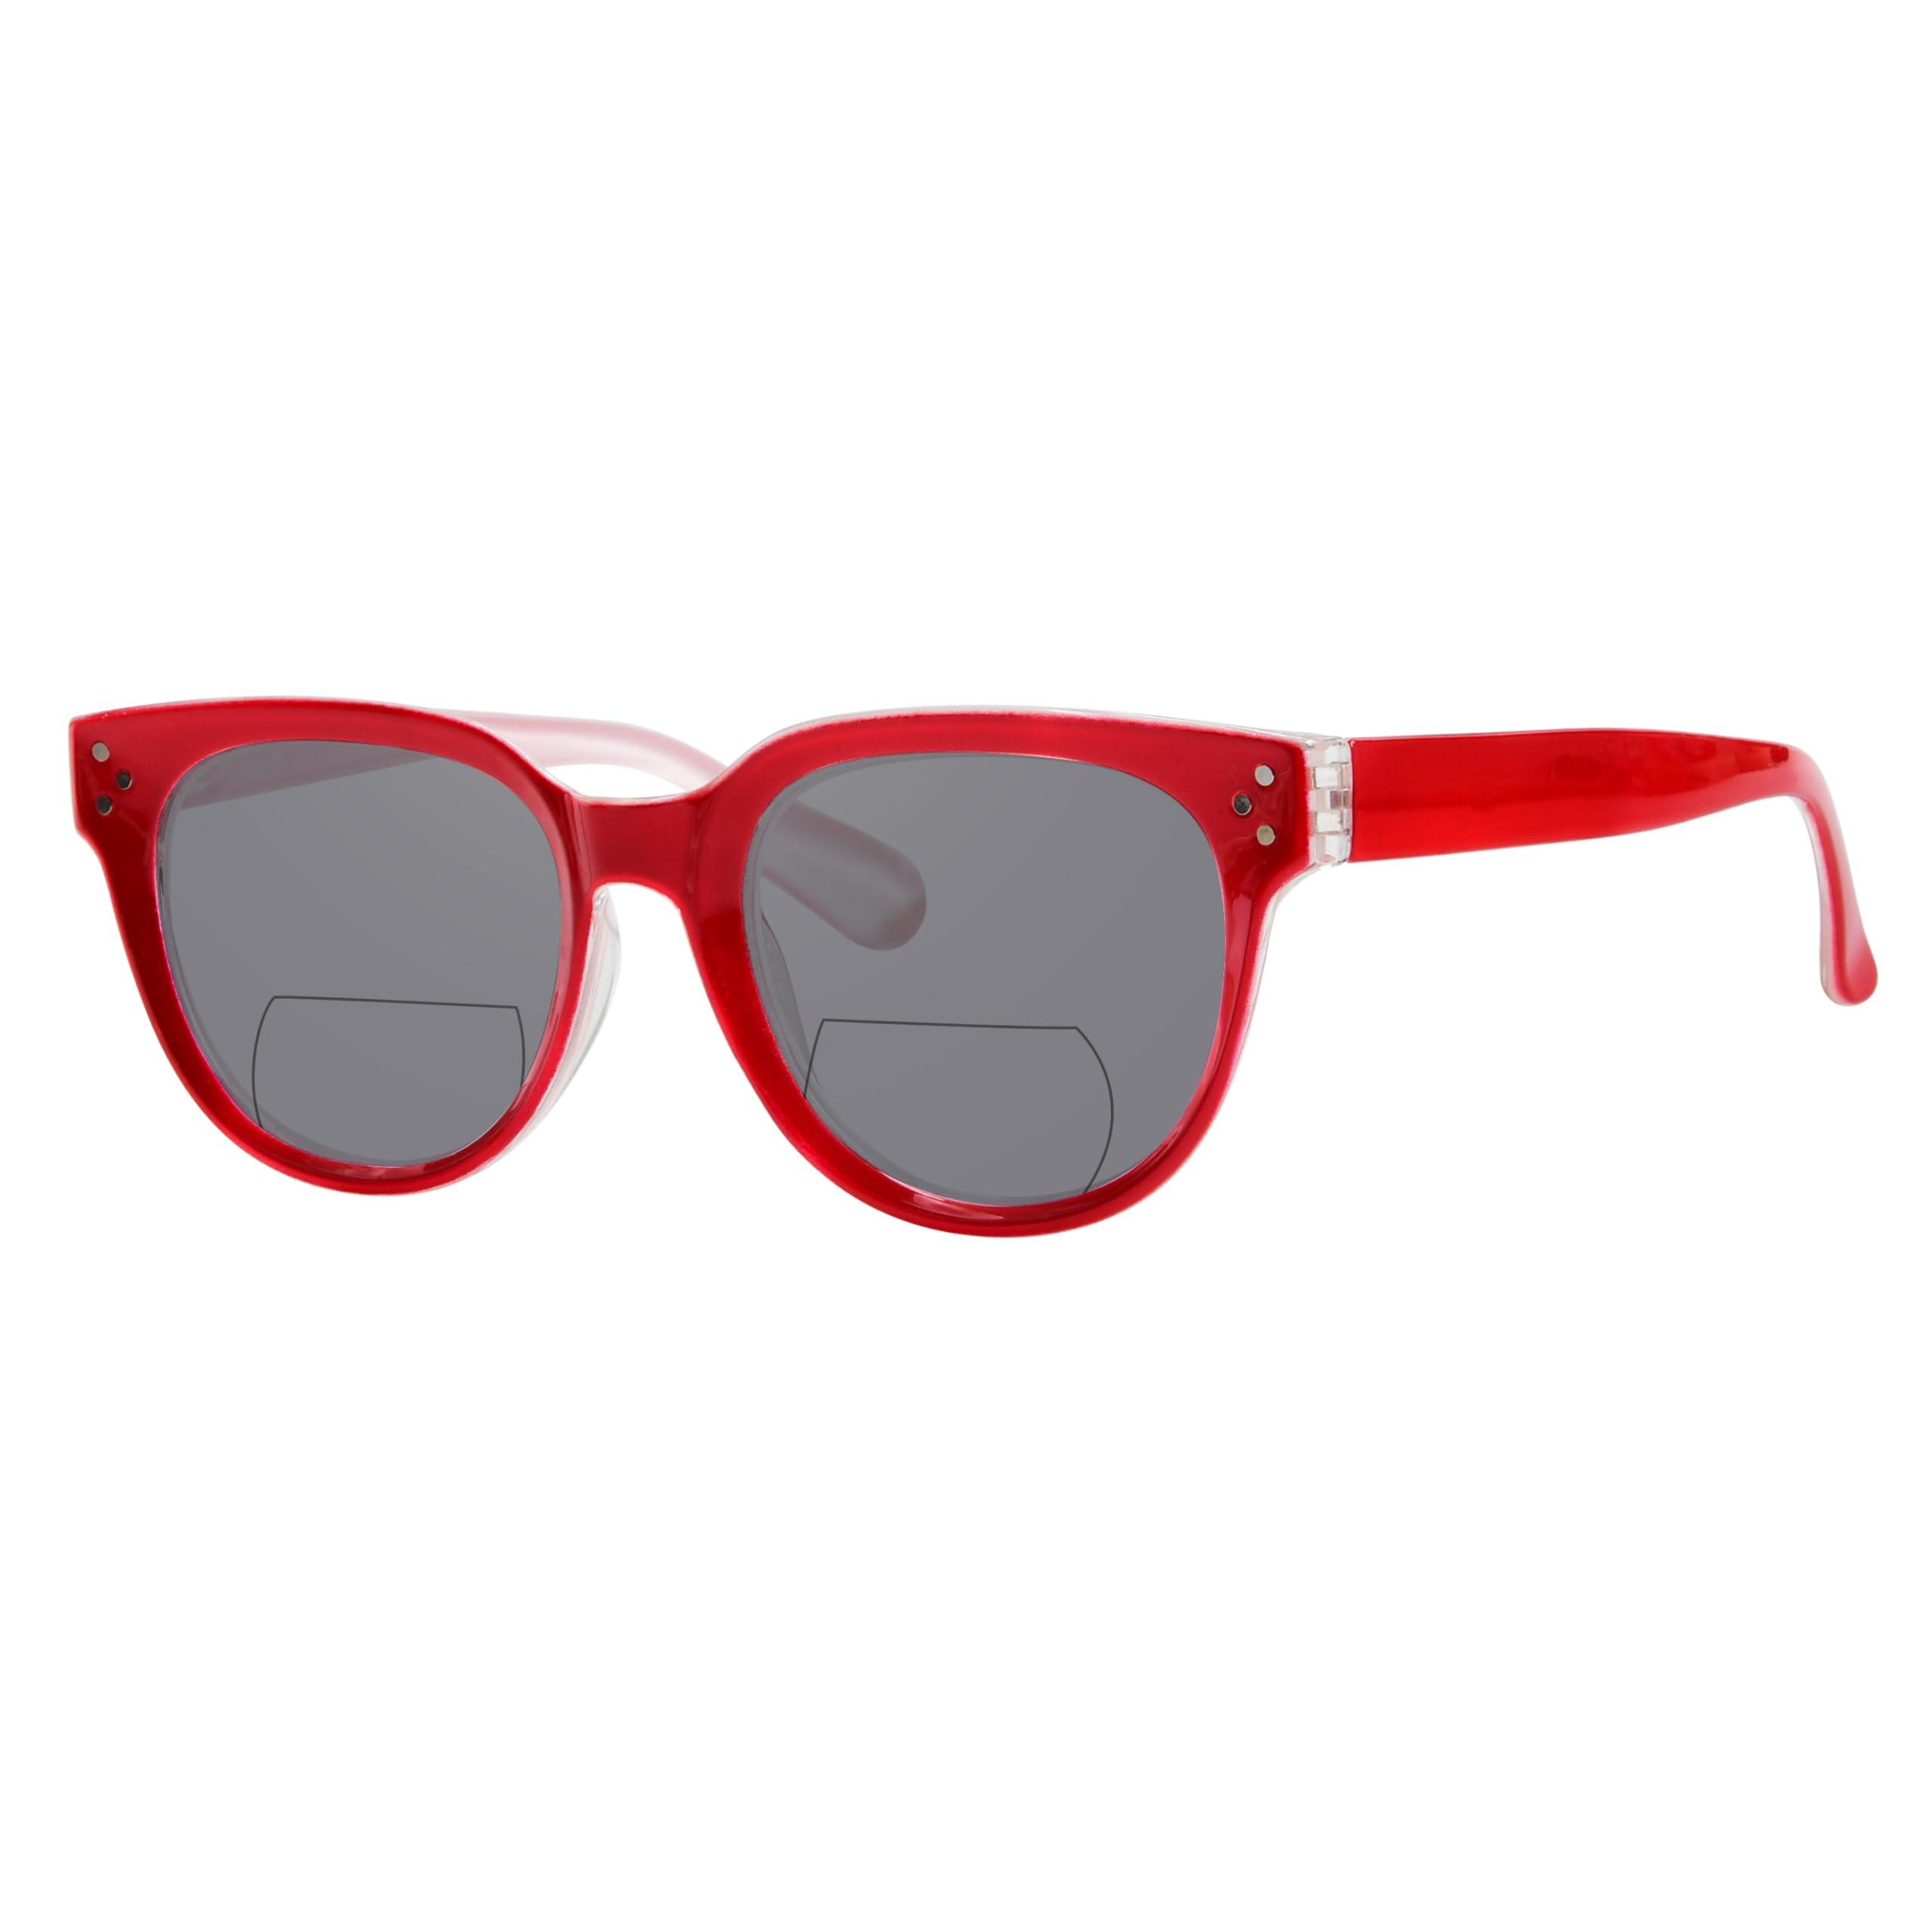 Eyekepper Bifocal Glasses for Women Reading under the Sun Stylish Bifocal Readers Tinted Lens - Red +3.00 0